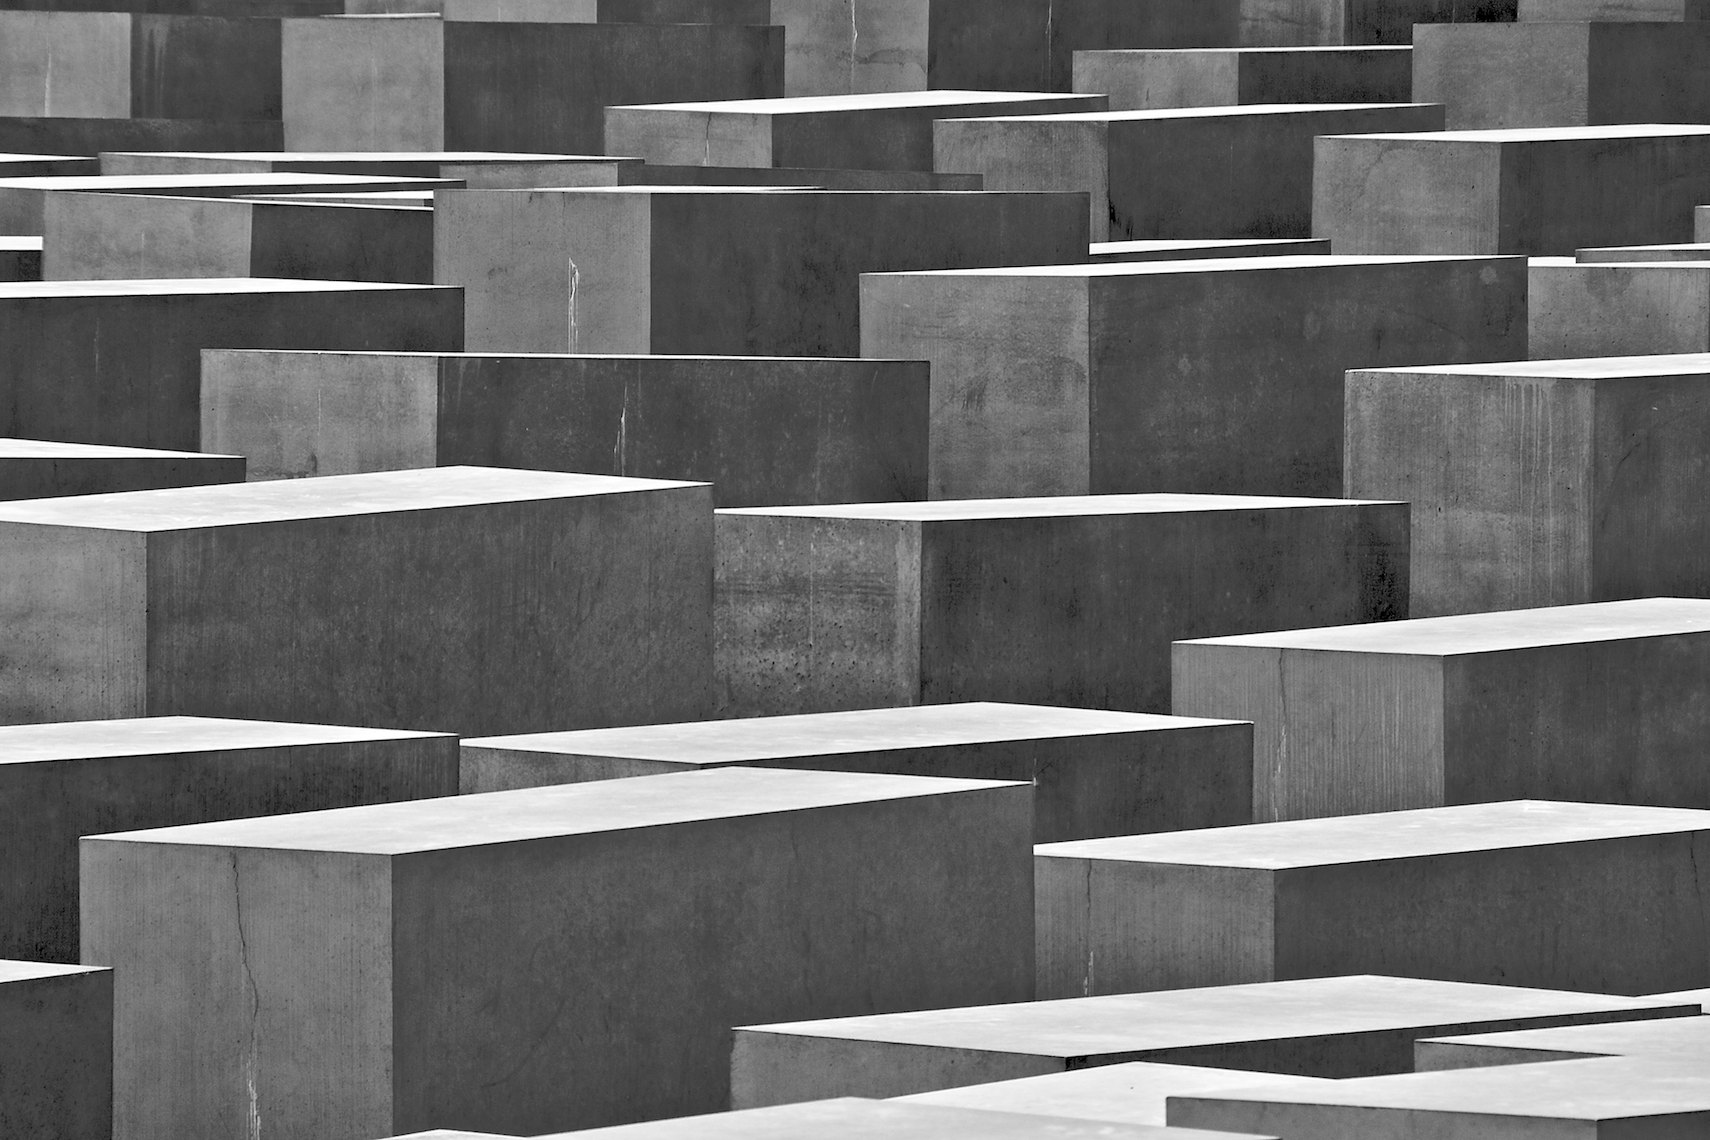 Berlin Holocaust memorial